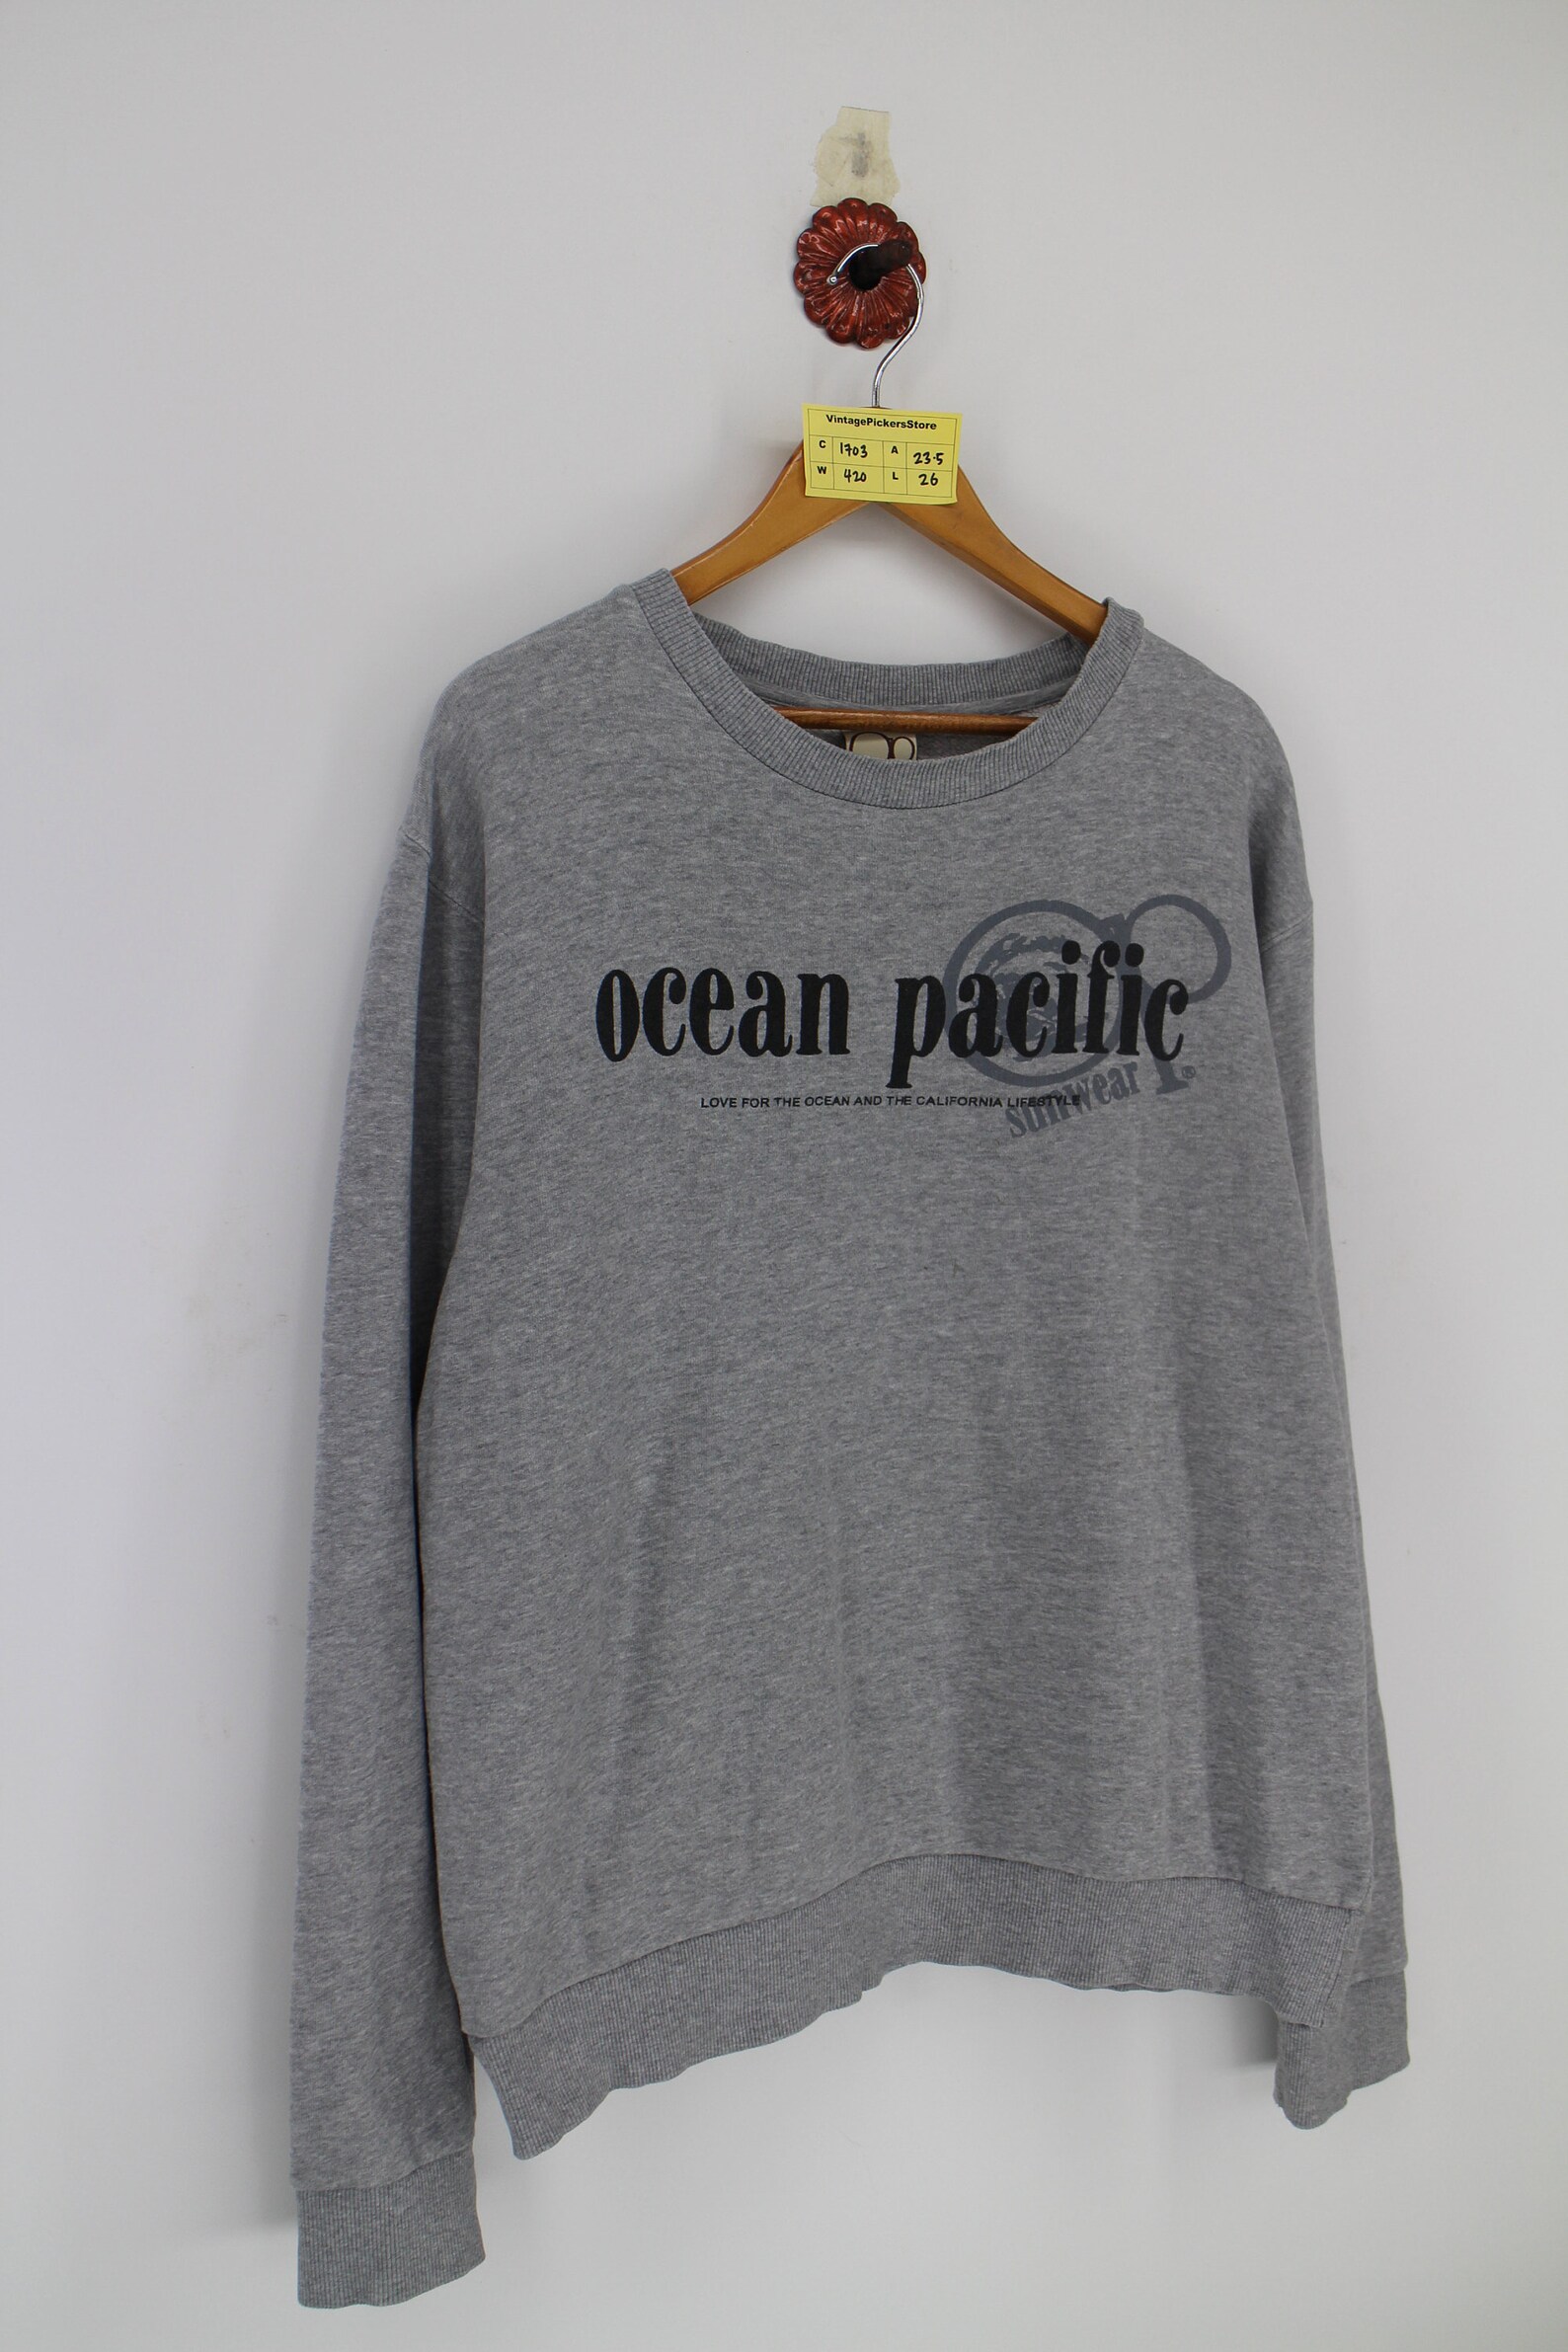 Vintage 90s OCEAN PACIFIC Sunwear Hawaii Sweatshirt Xlarge | Etsy